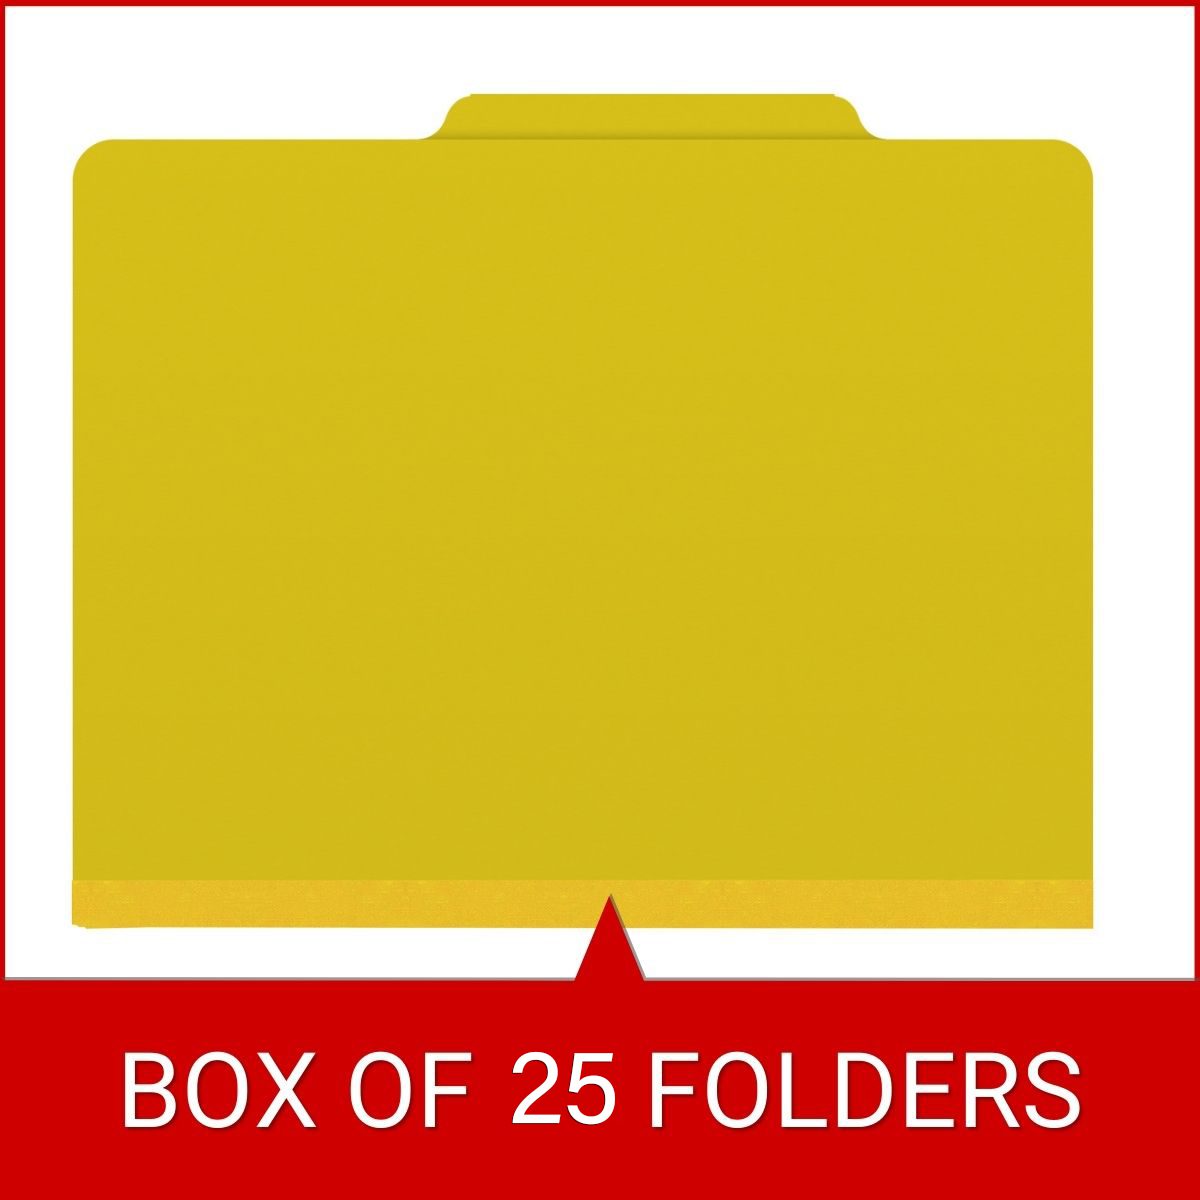 ! 10 Folders Per Box Bottom boarder